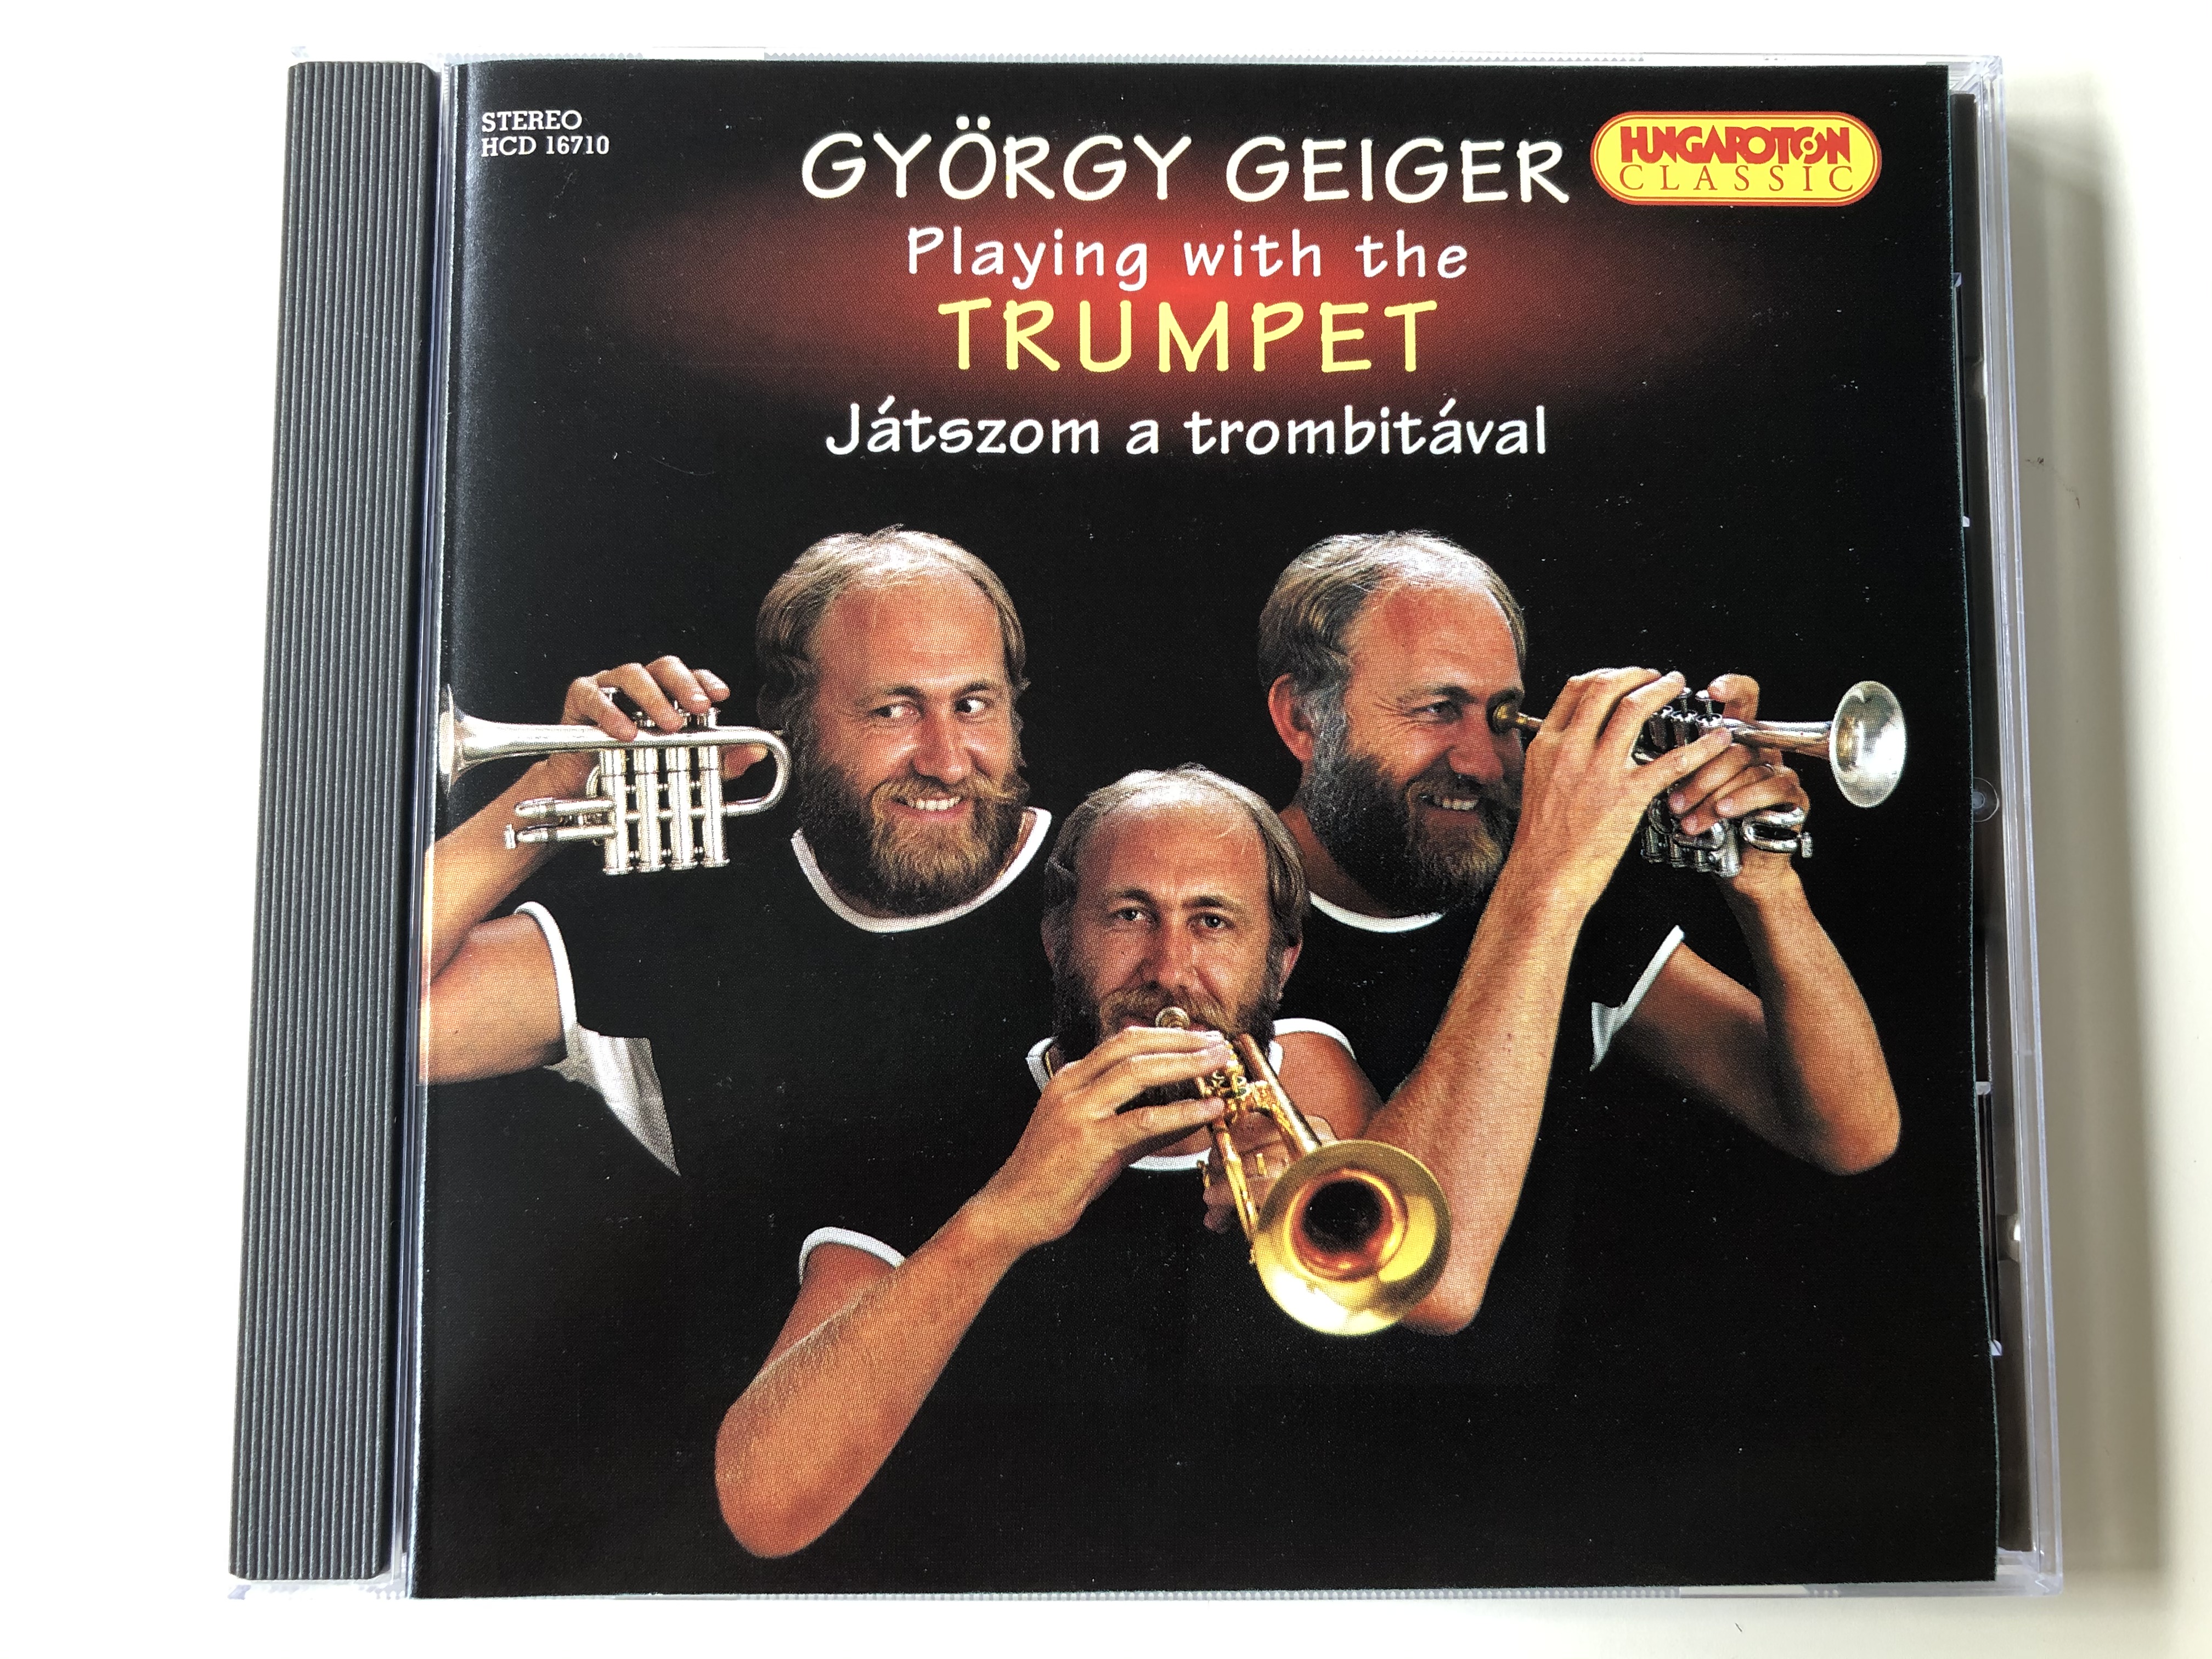 gy-rgy-geiger-playing-with-the-trumpet-j-tszom-a-trombit-val-hungaroton-classic-audio-cd-1996-stereo-hcd-16710-hcd-16710-1-.jpg